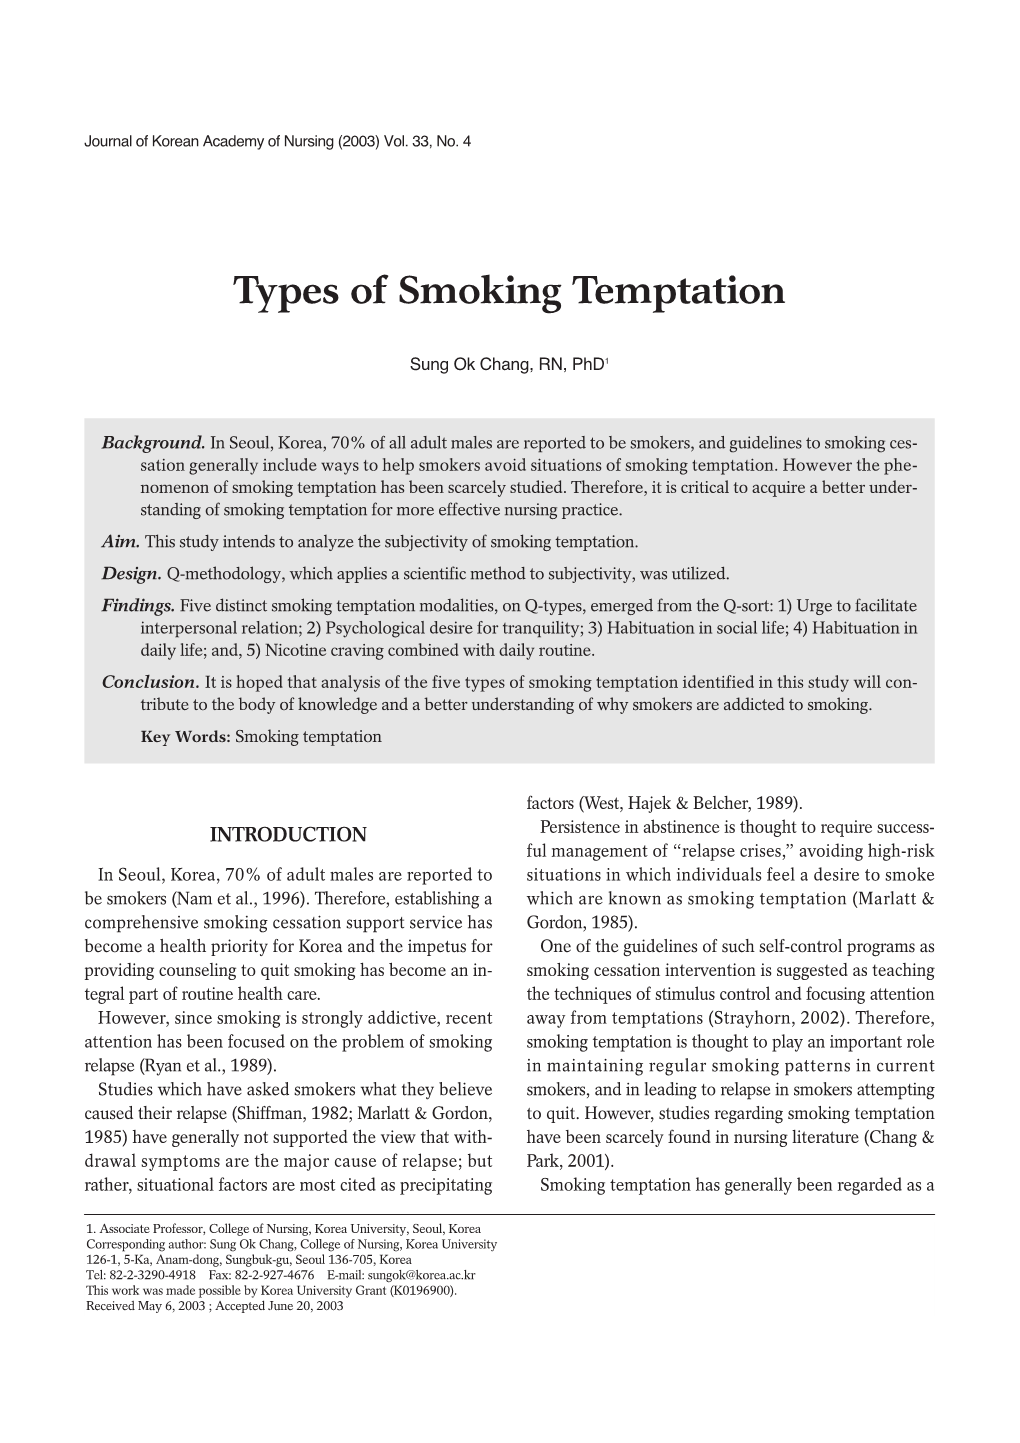 Types of Smoking Temptation